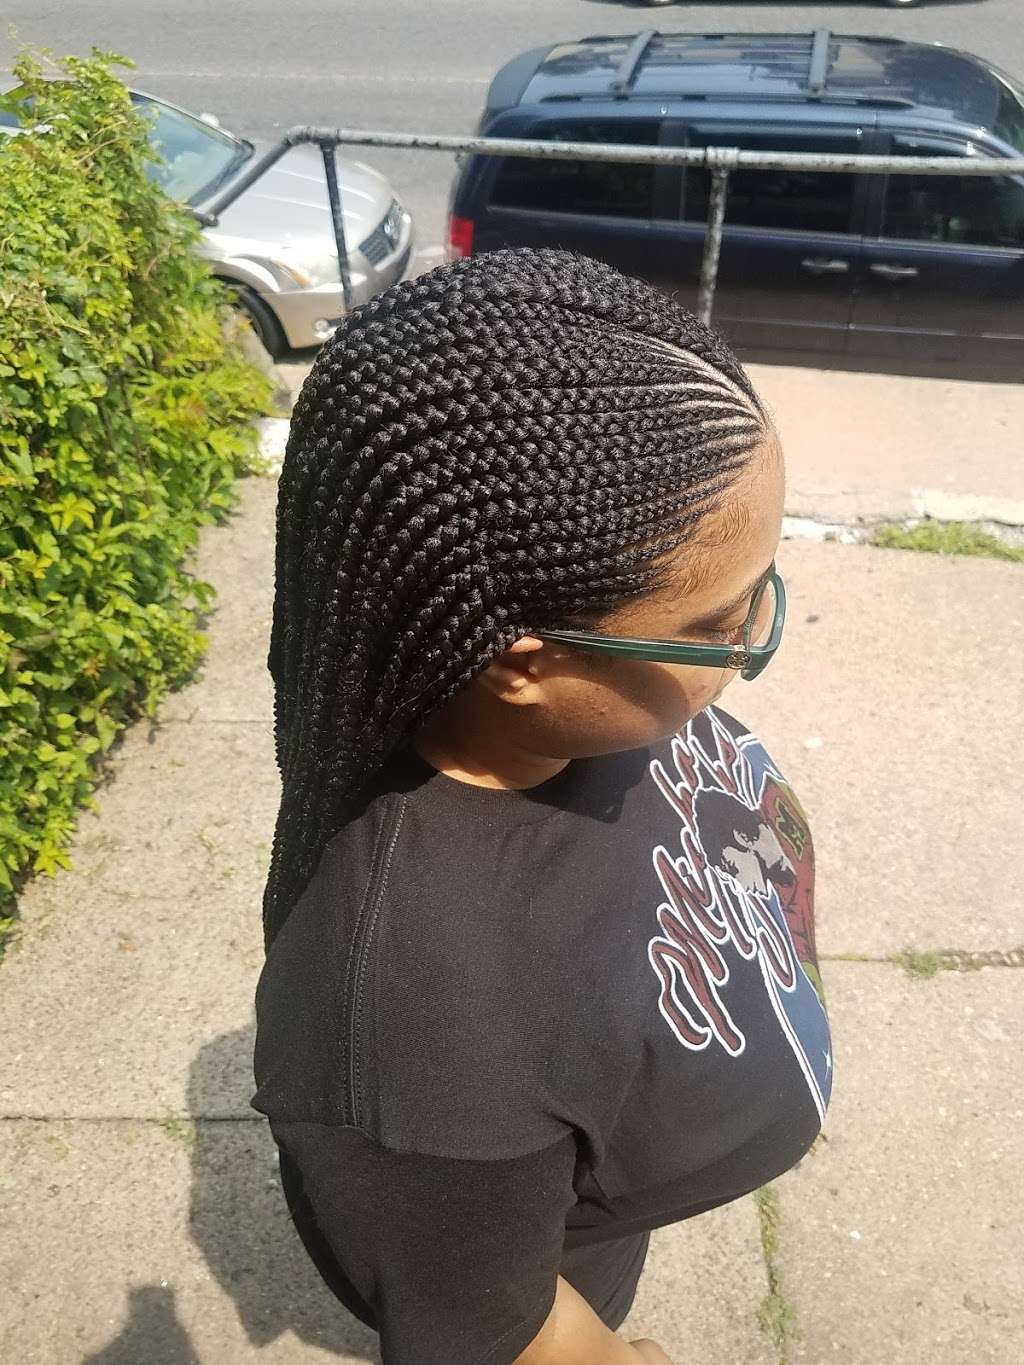 African hair braiding by Alvine | 108 W Tabor Rd, Philadelphia, PA 19120 | Phone: (267) 504-8573